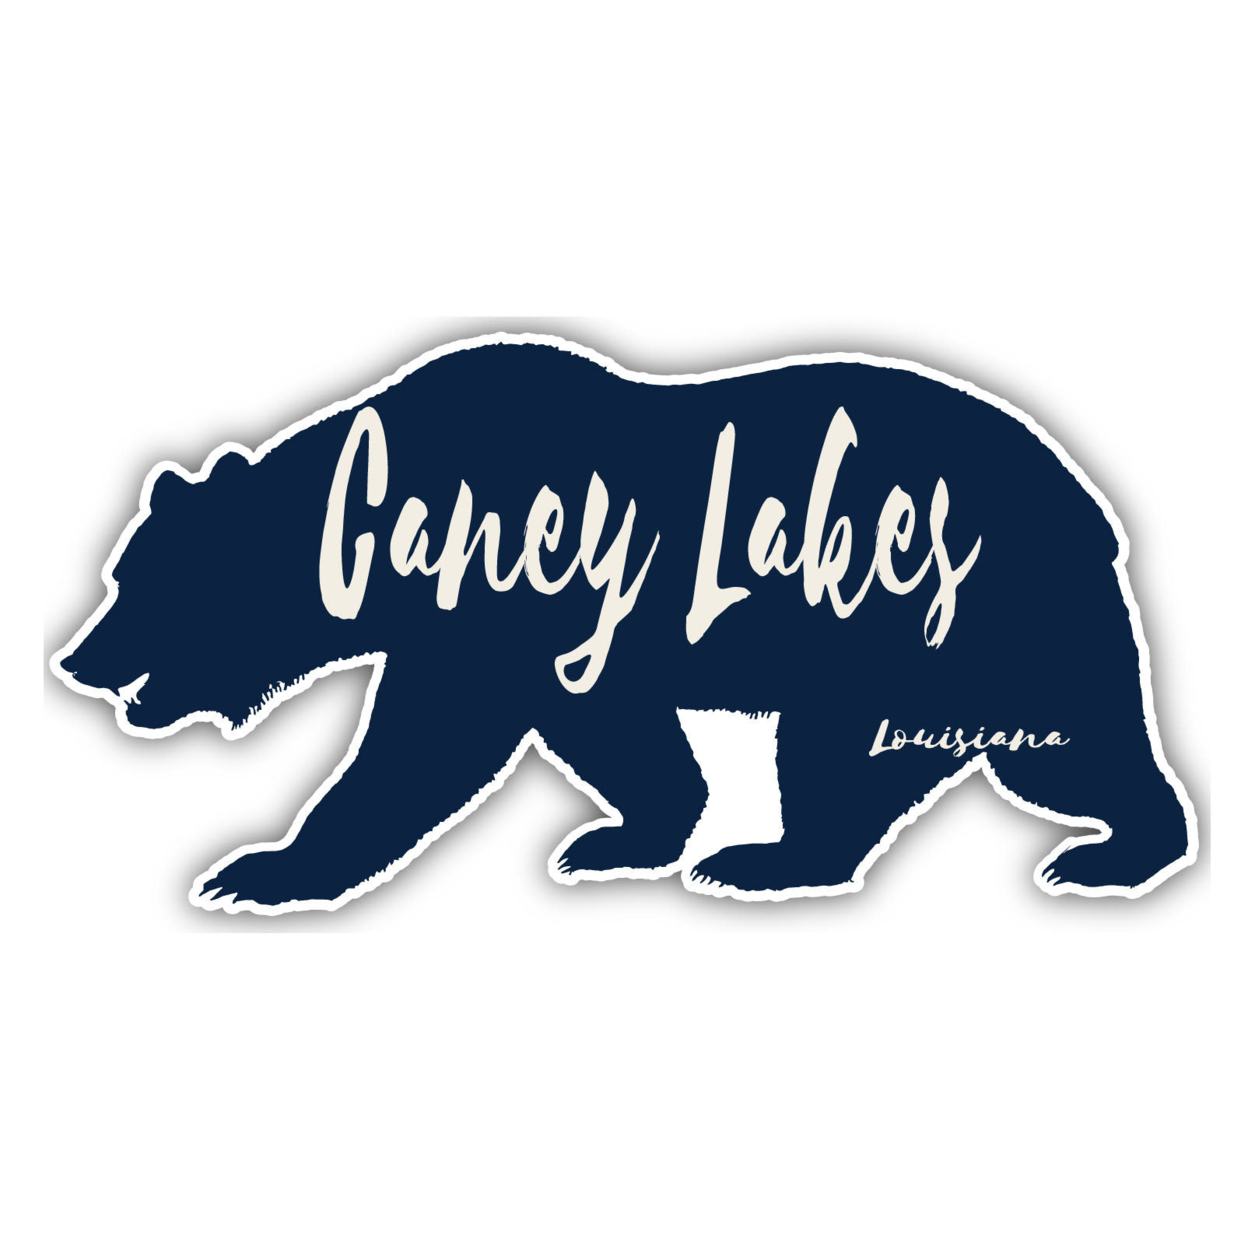 Caney Lakes Louisiana Souvenir Decorative Stickers (Choose Theme And Size) - Single Unit, 6-Inch, Bear